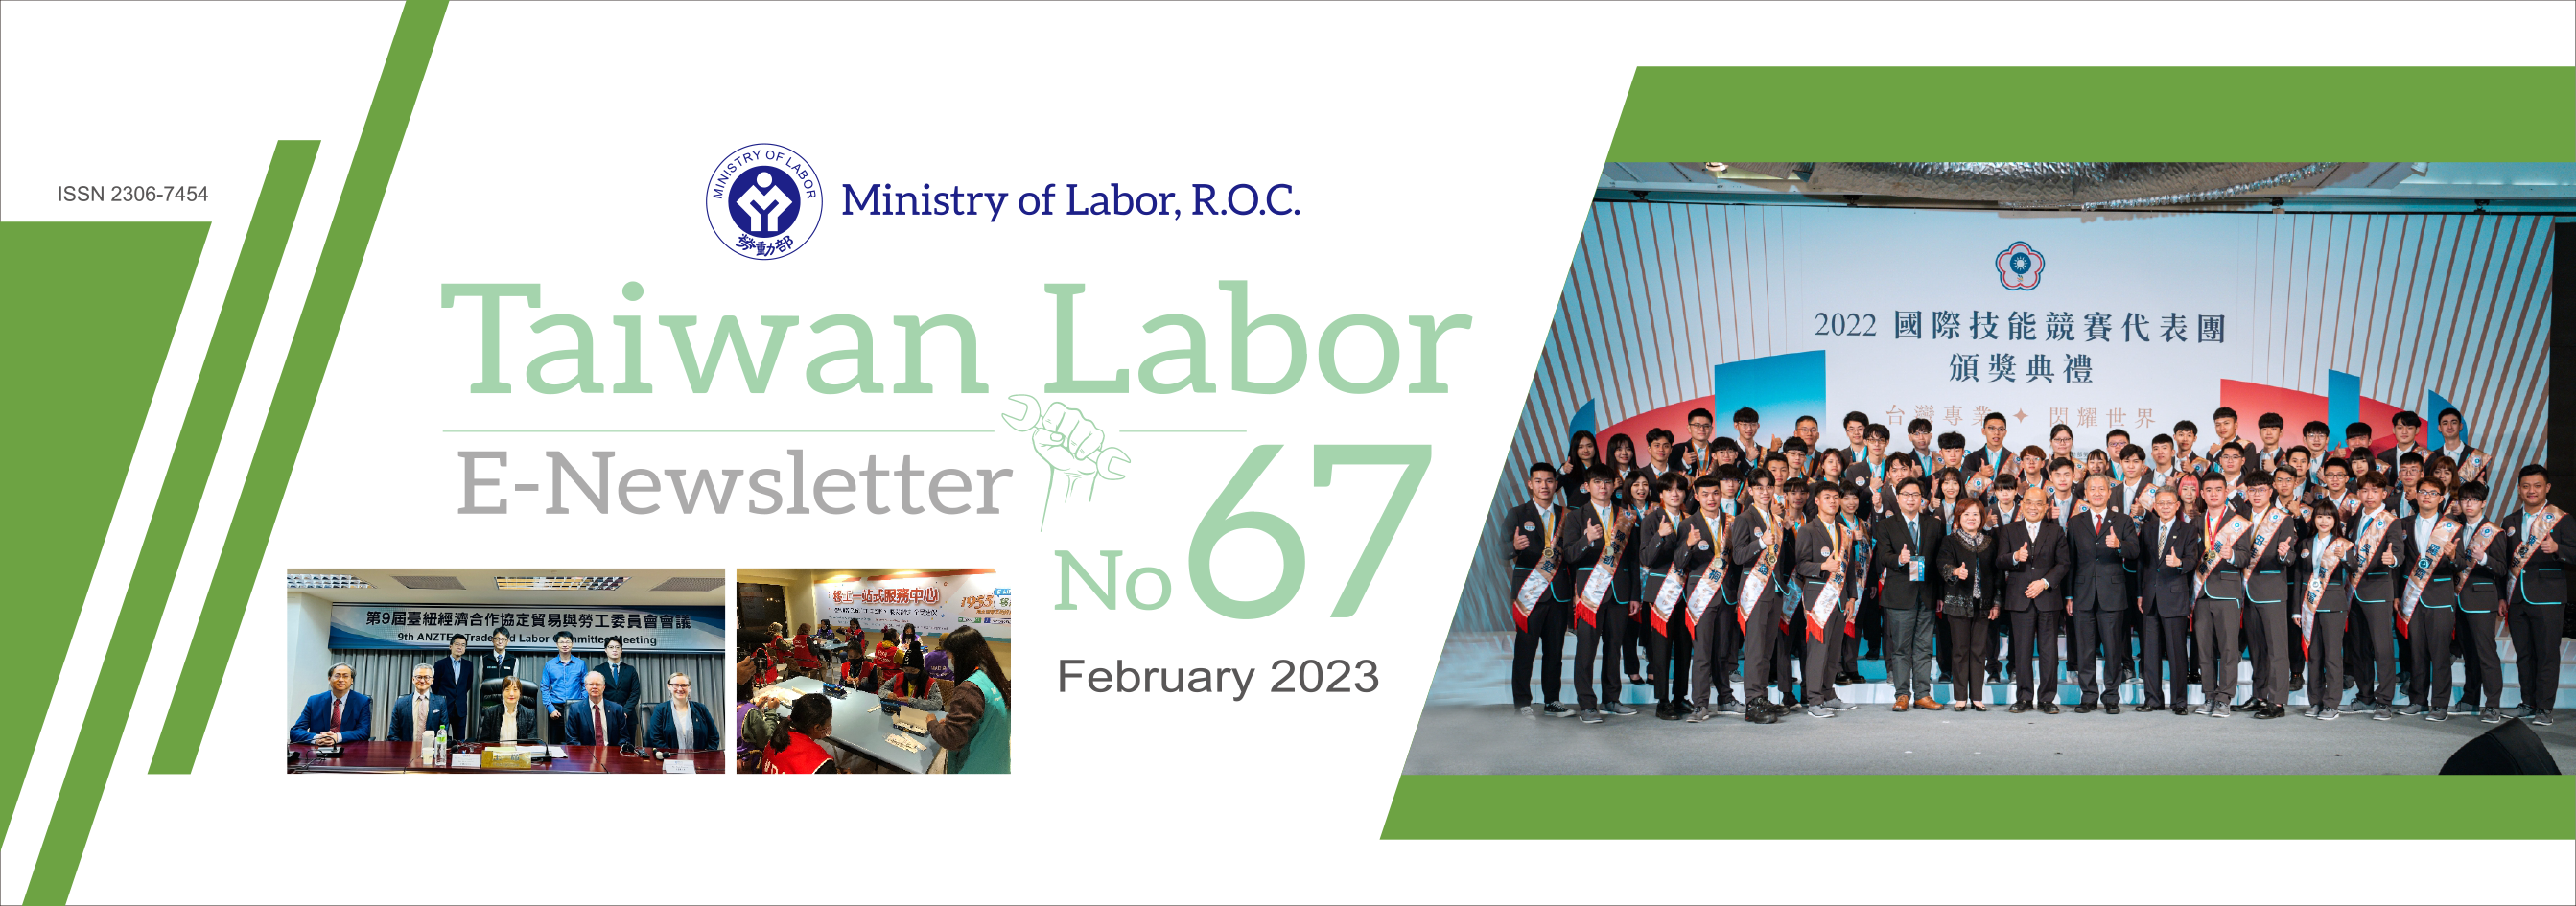 Taiwan Labor E-Newsletter No.67 Banner